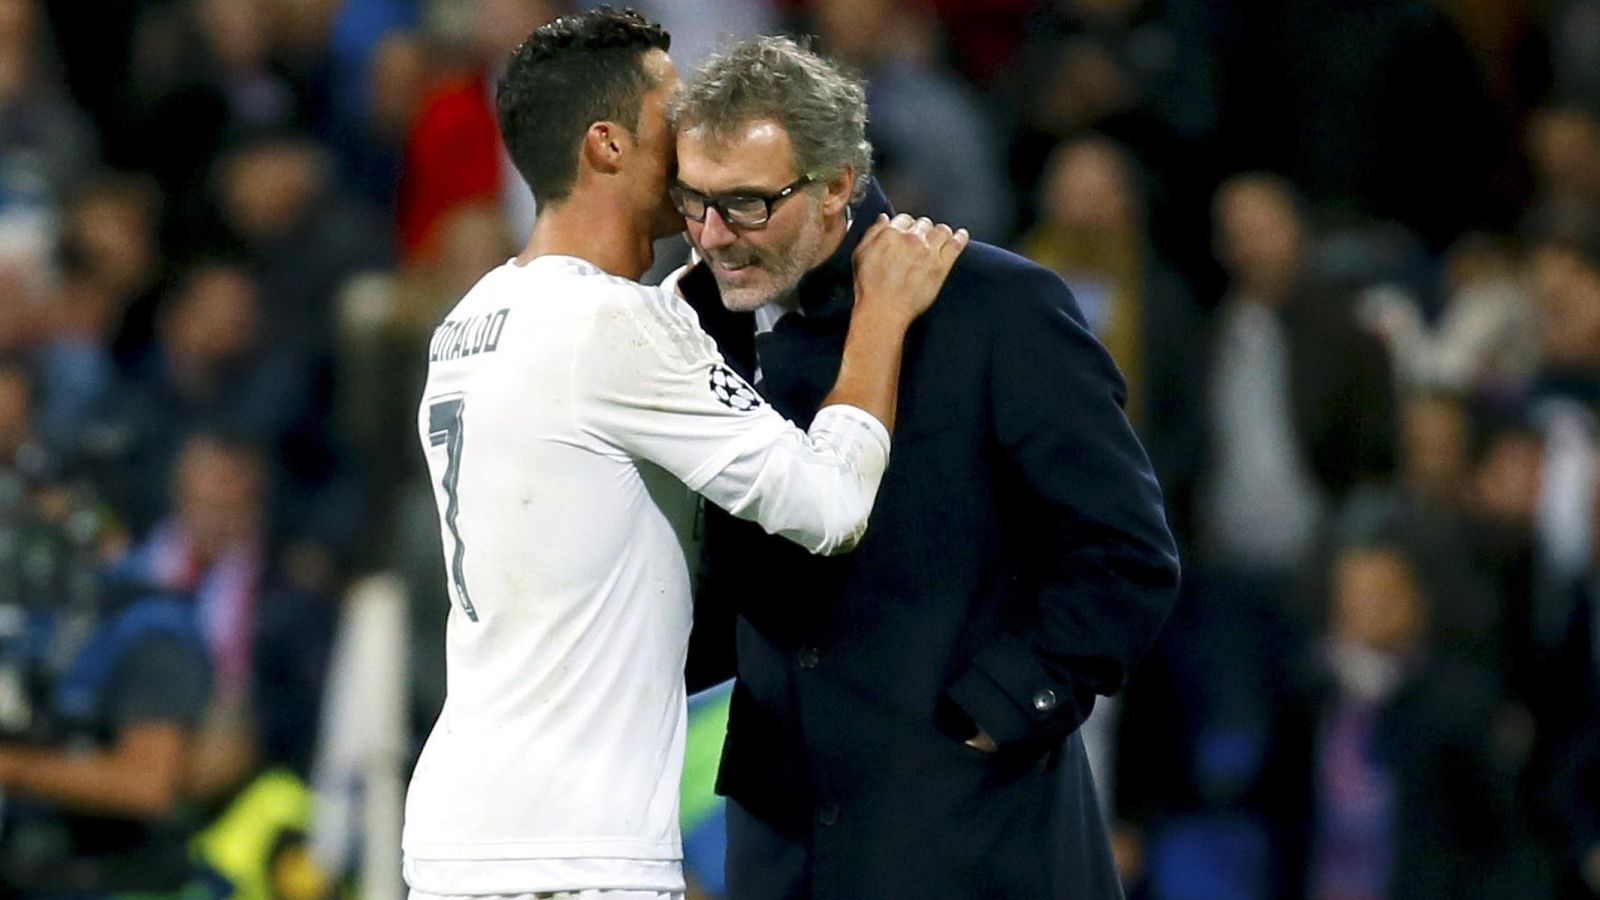 Foto: Cristiano Ronaldo le dice algo al oído al técnico del PSG, Laurent Blanc (EFE)